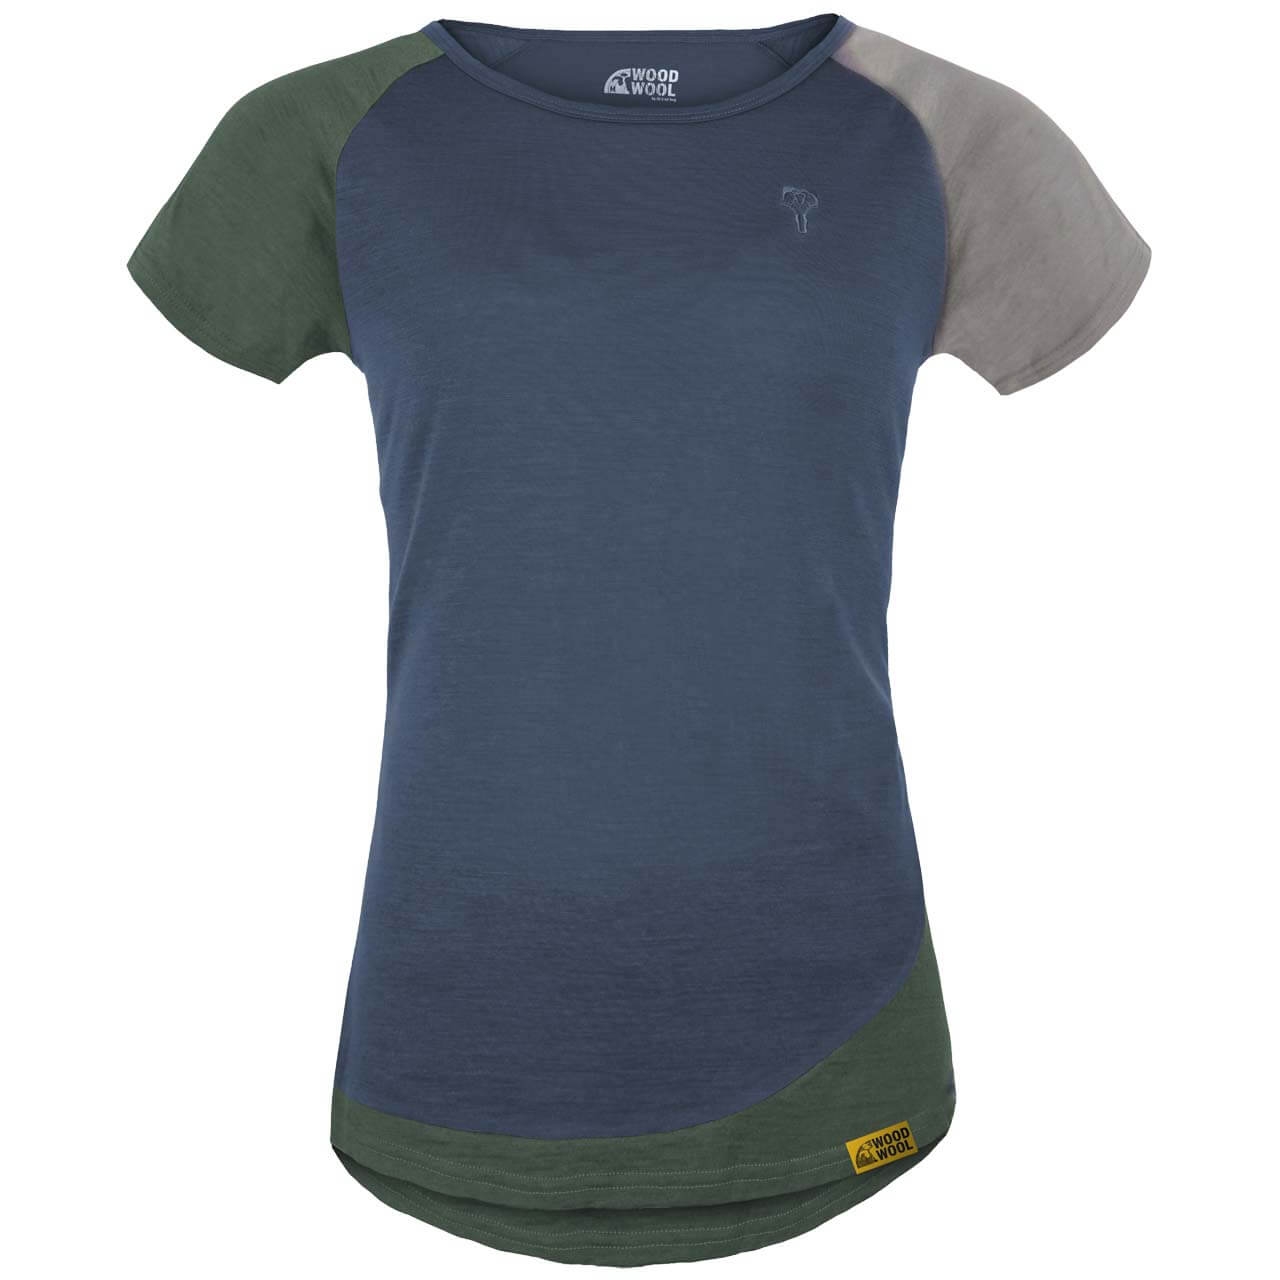 Grüezi Bag WoodWool Janeway T-Shirt - Ocean Cavern, M von Grüezi Bag